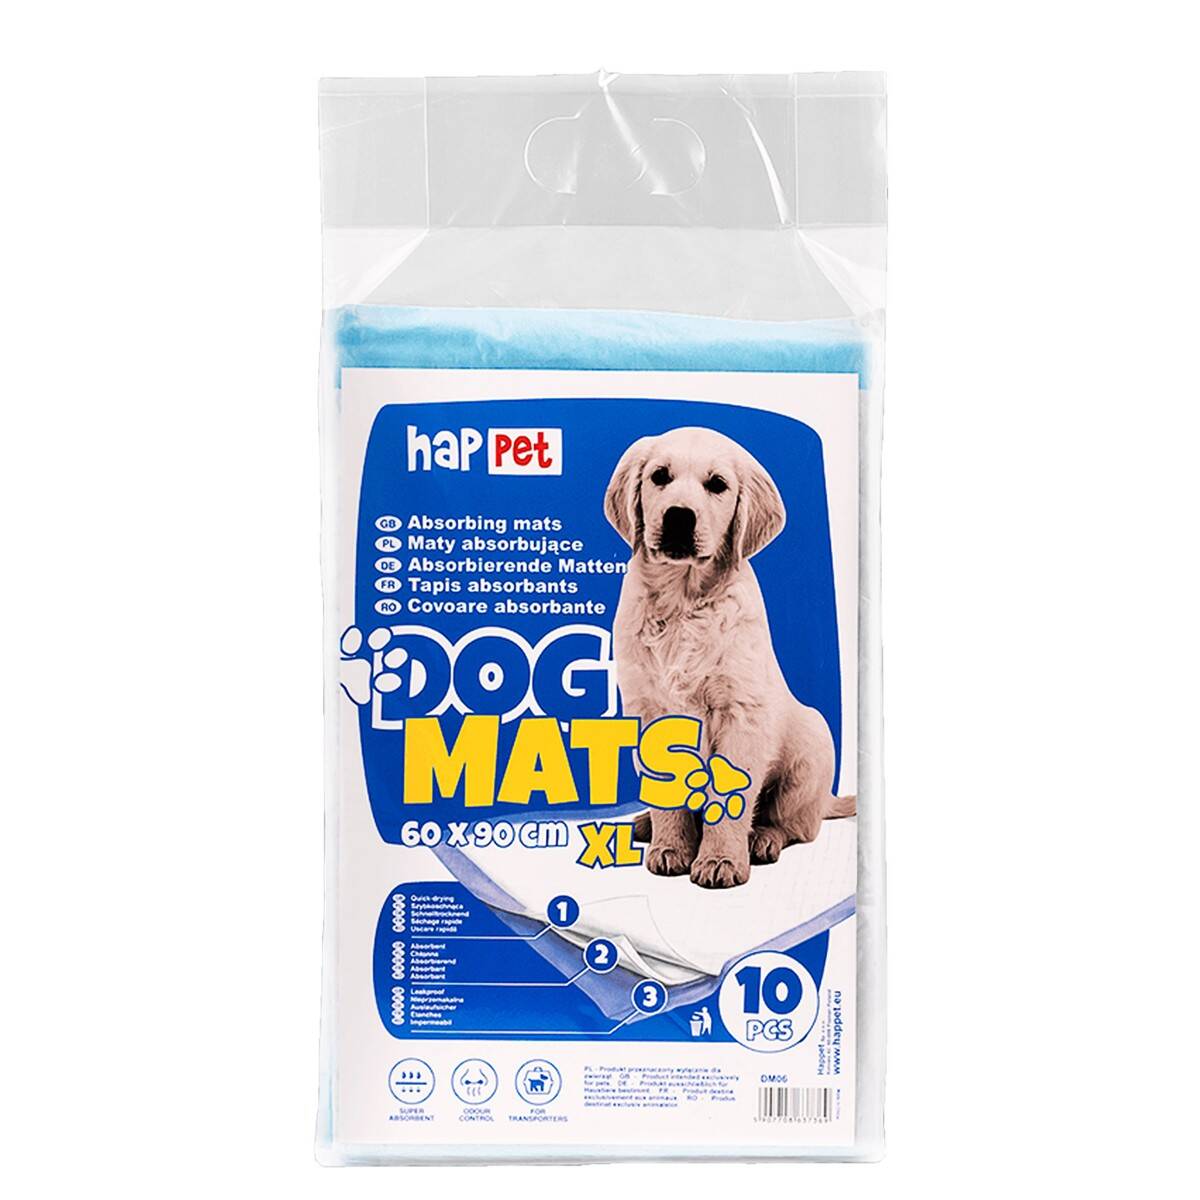 Maty Dog Mats Happet 90x60cm 10 szt.